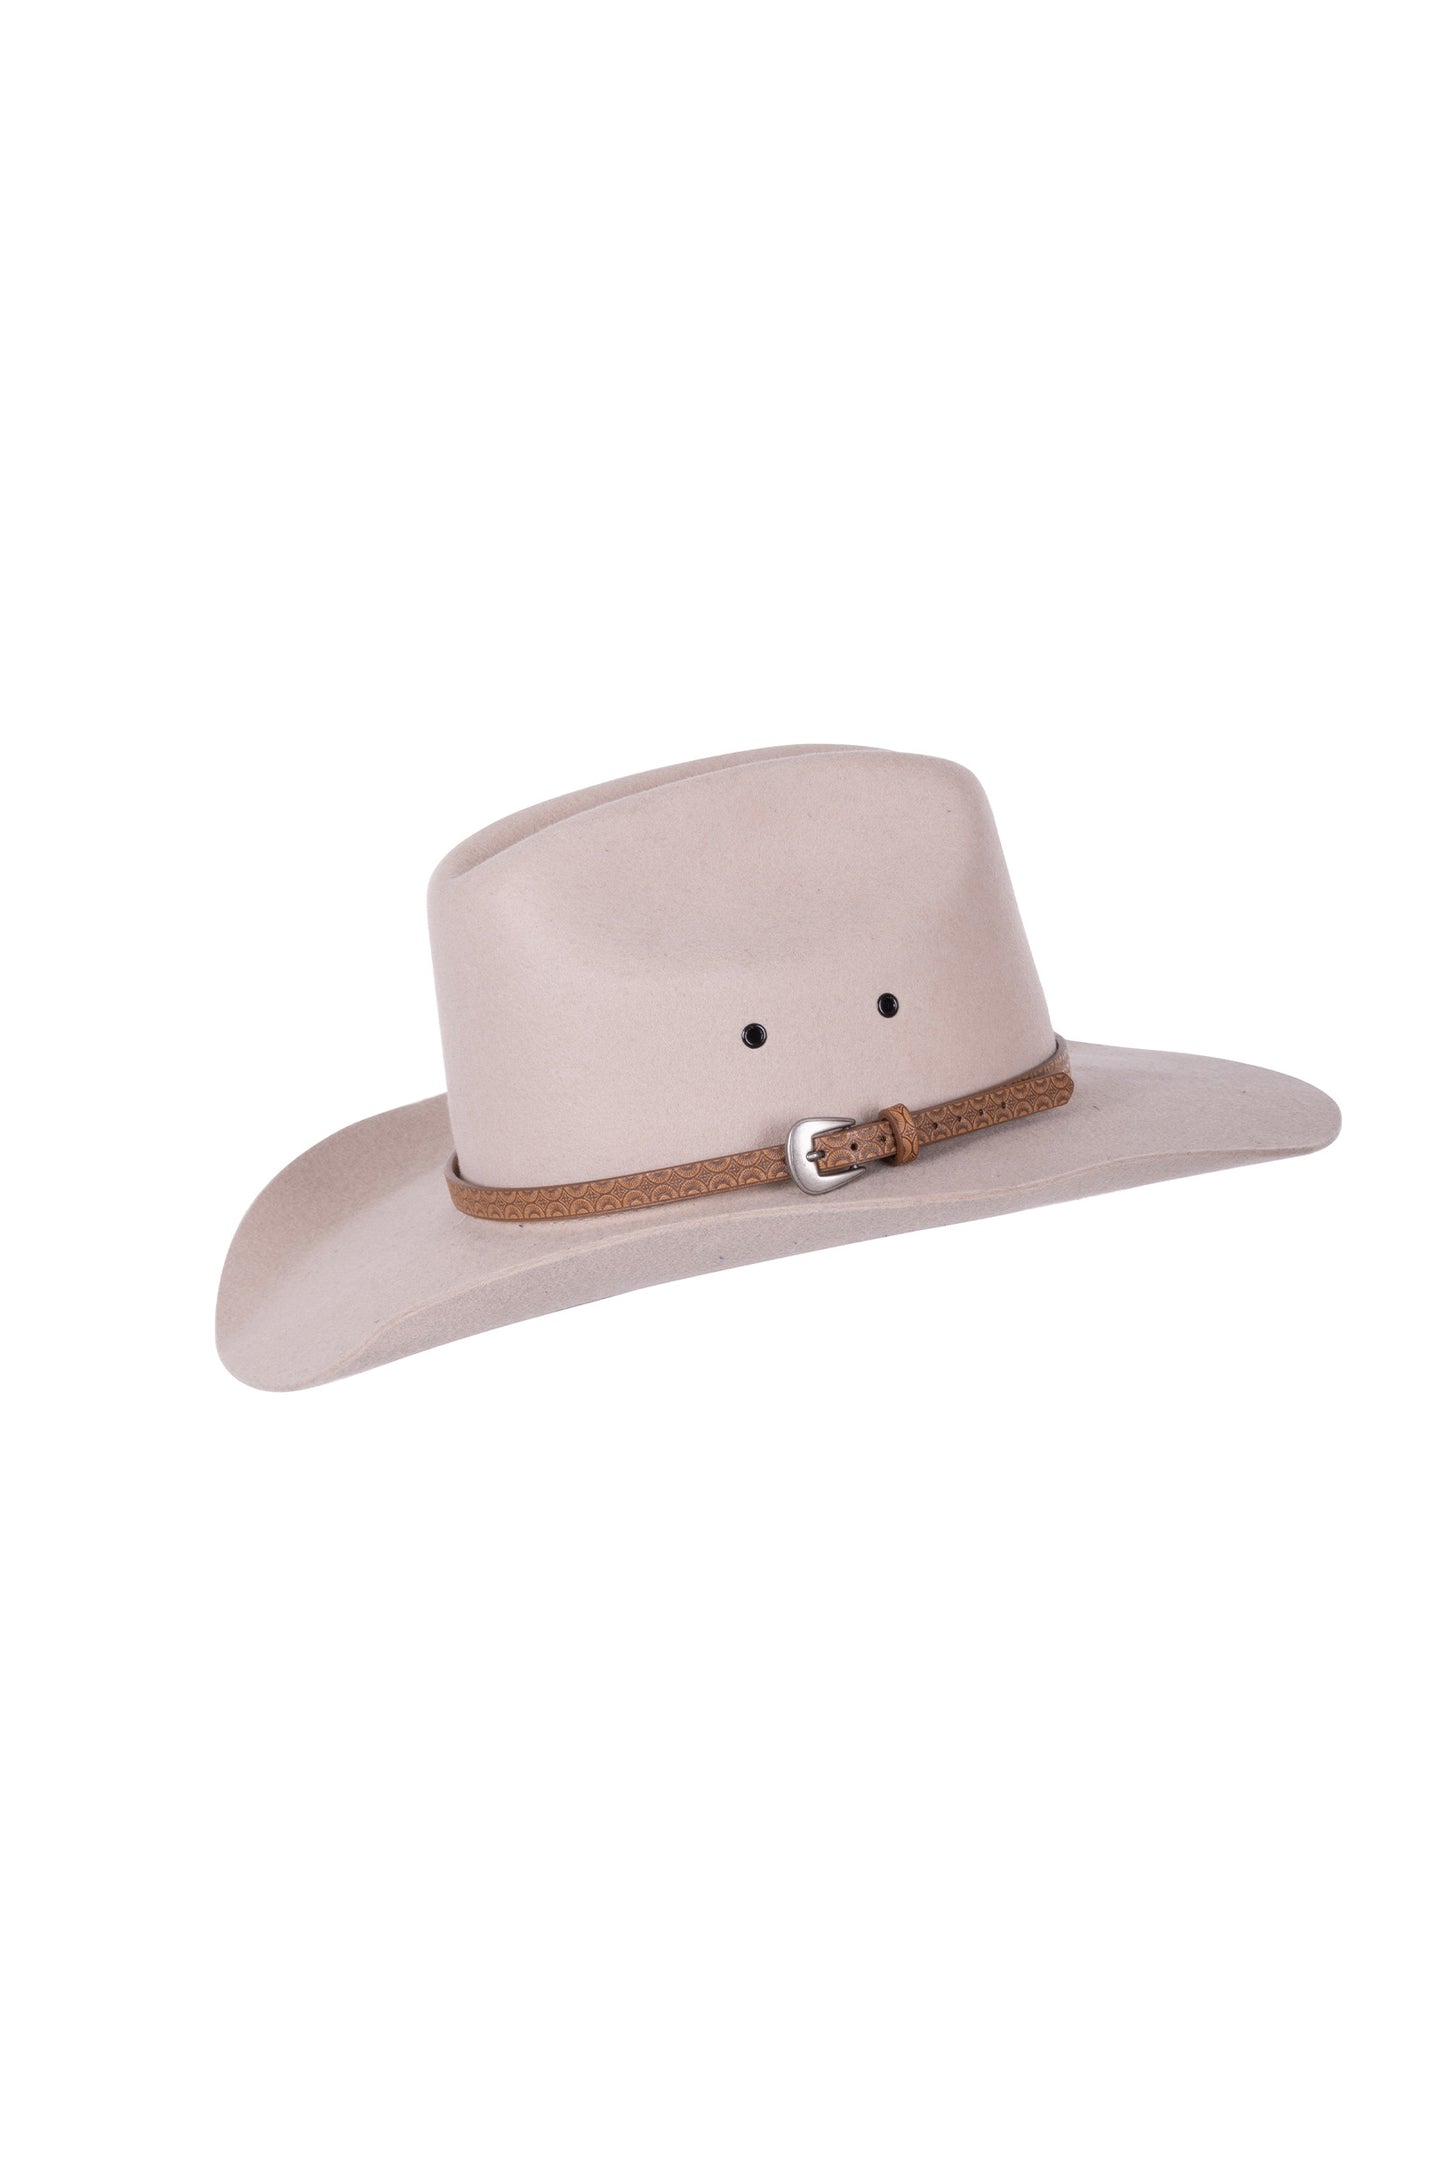 Pure Western Terri Hat Band - Tan - P3S2996BND